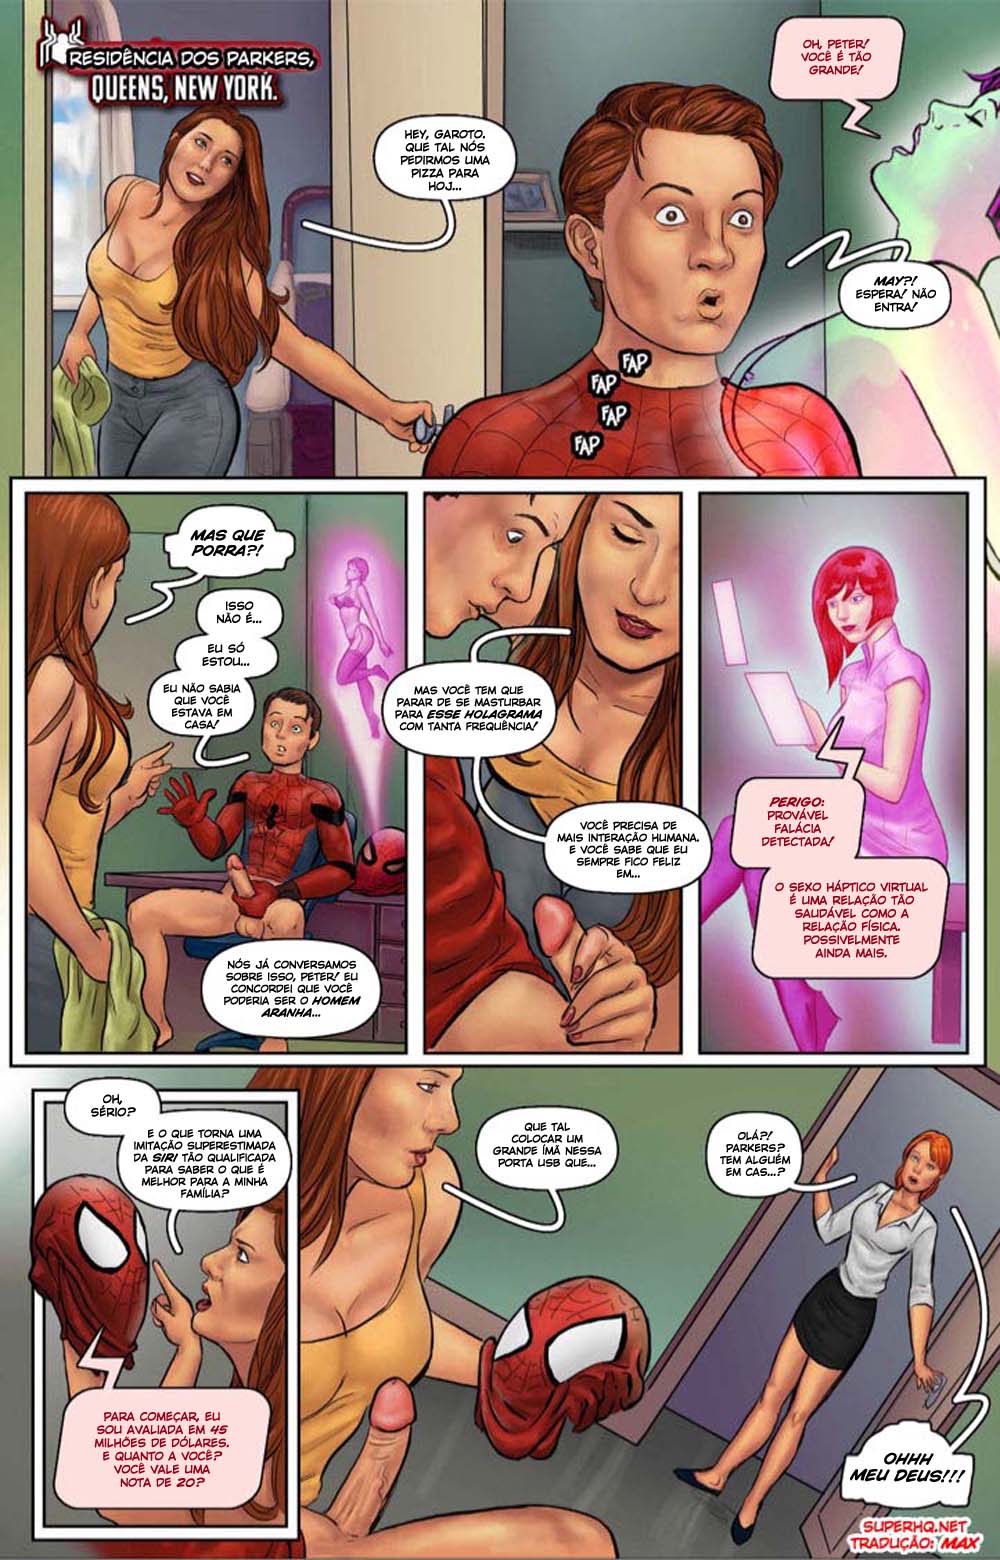 Hitting The Potts â€“ Spider-Man Porn Parody | Top Hentai Comics